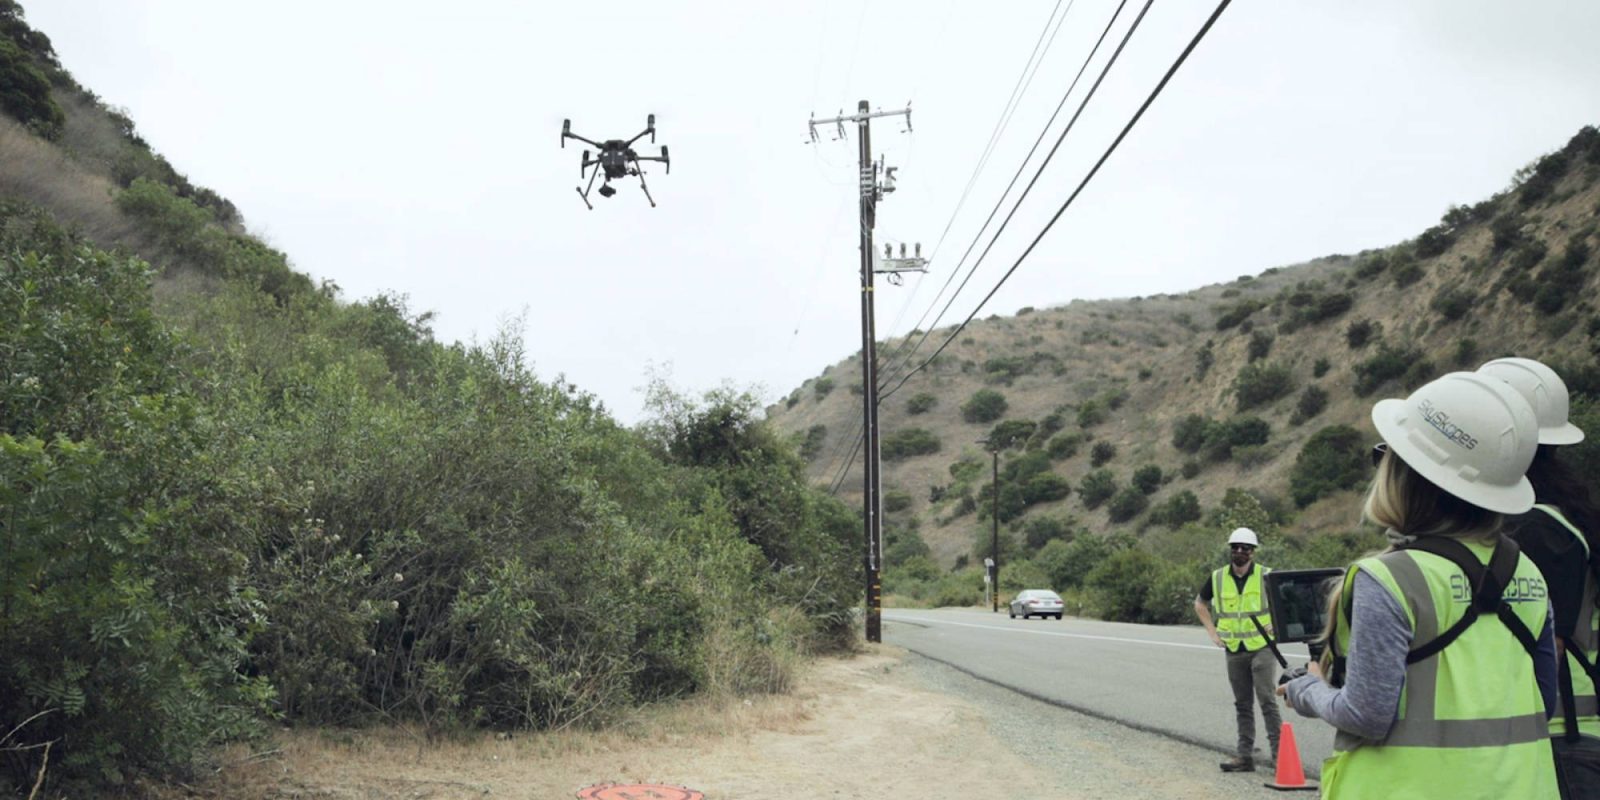 Edison drones to inspect equipment